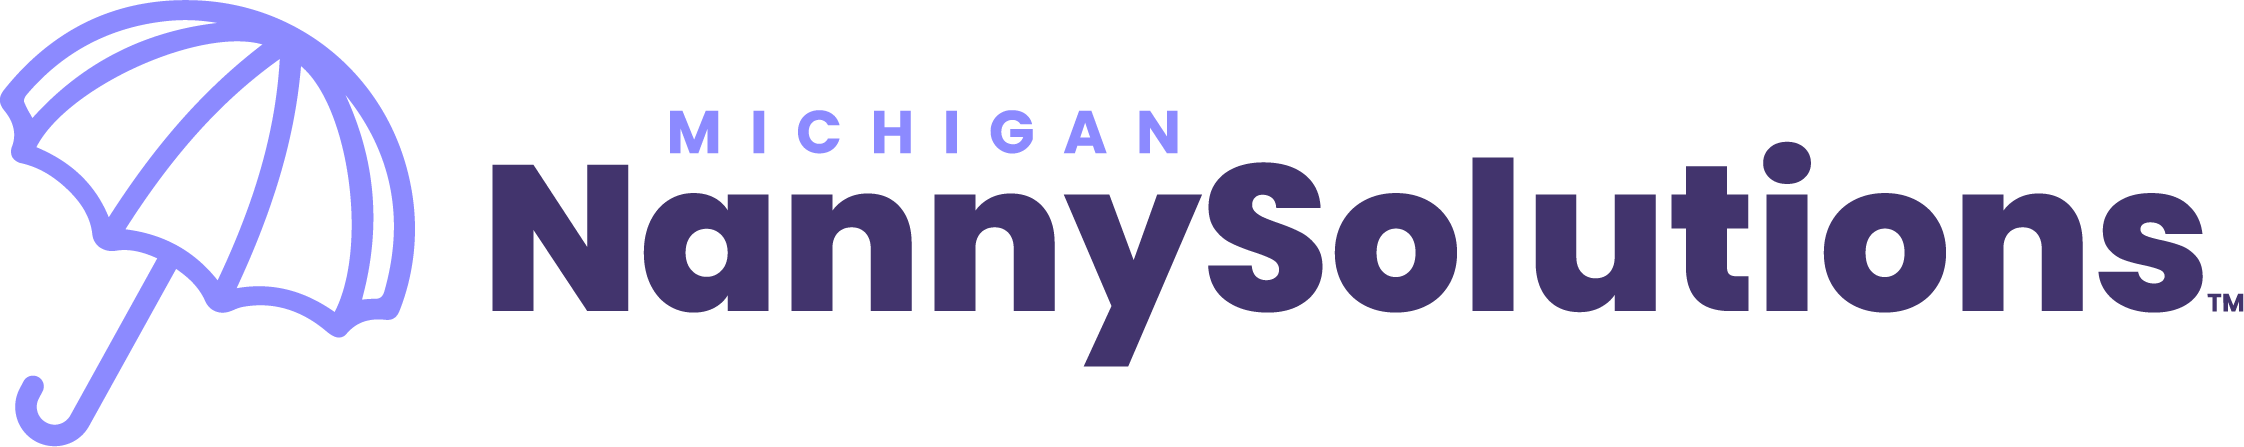 Michigan Nanny Solutions Families!